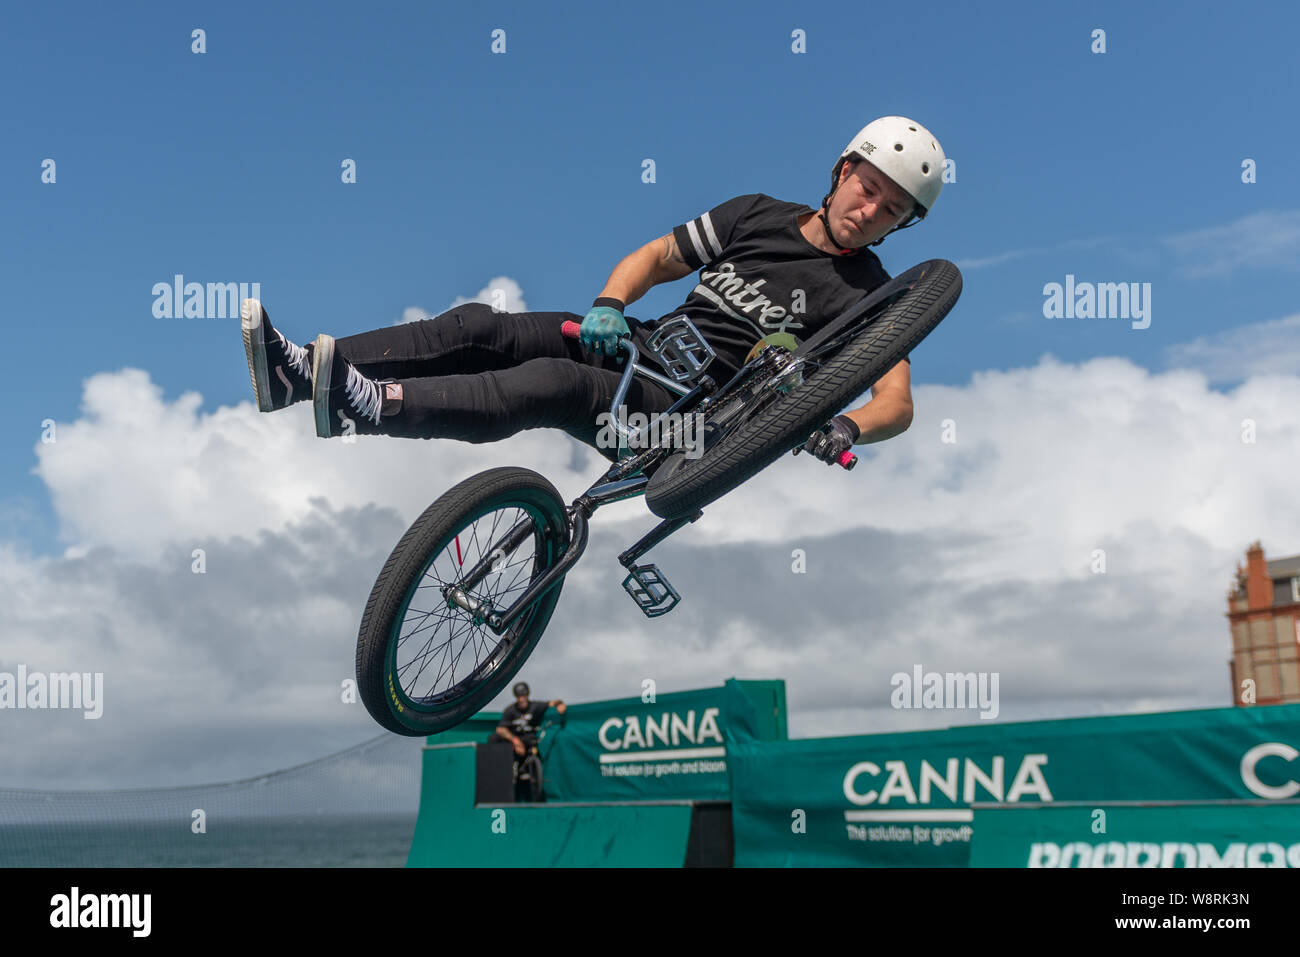 BMX tricks on a half pipe Stock Photo - Alamy